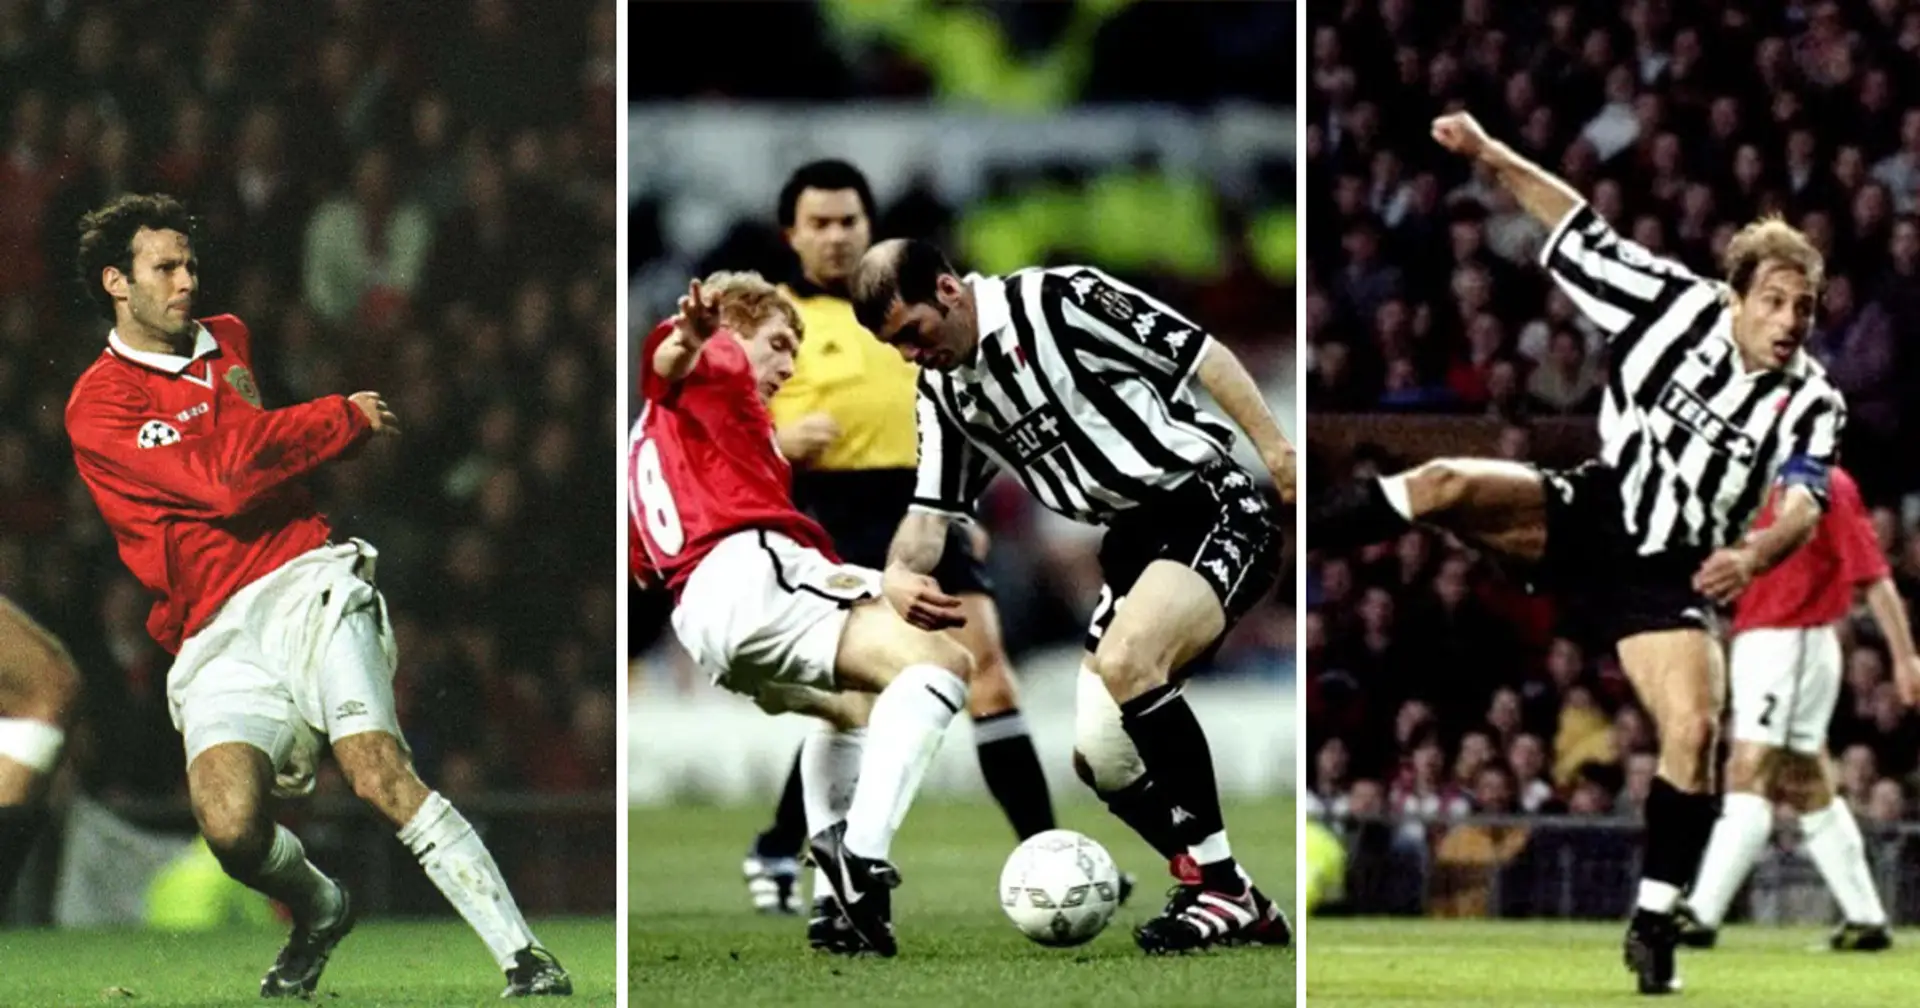 7 April, 1999: Man United vs Juventus. Match blog of Champions League semifinal first leg